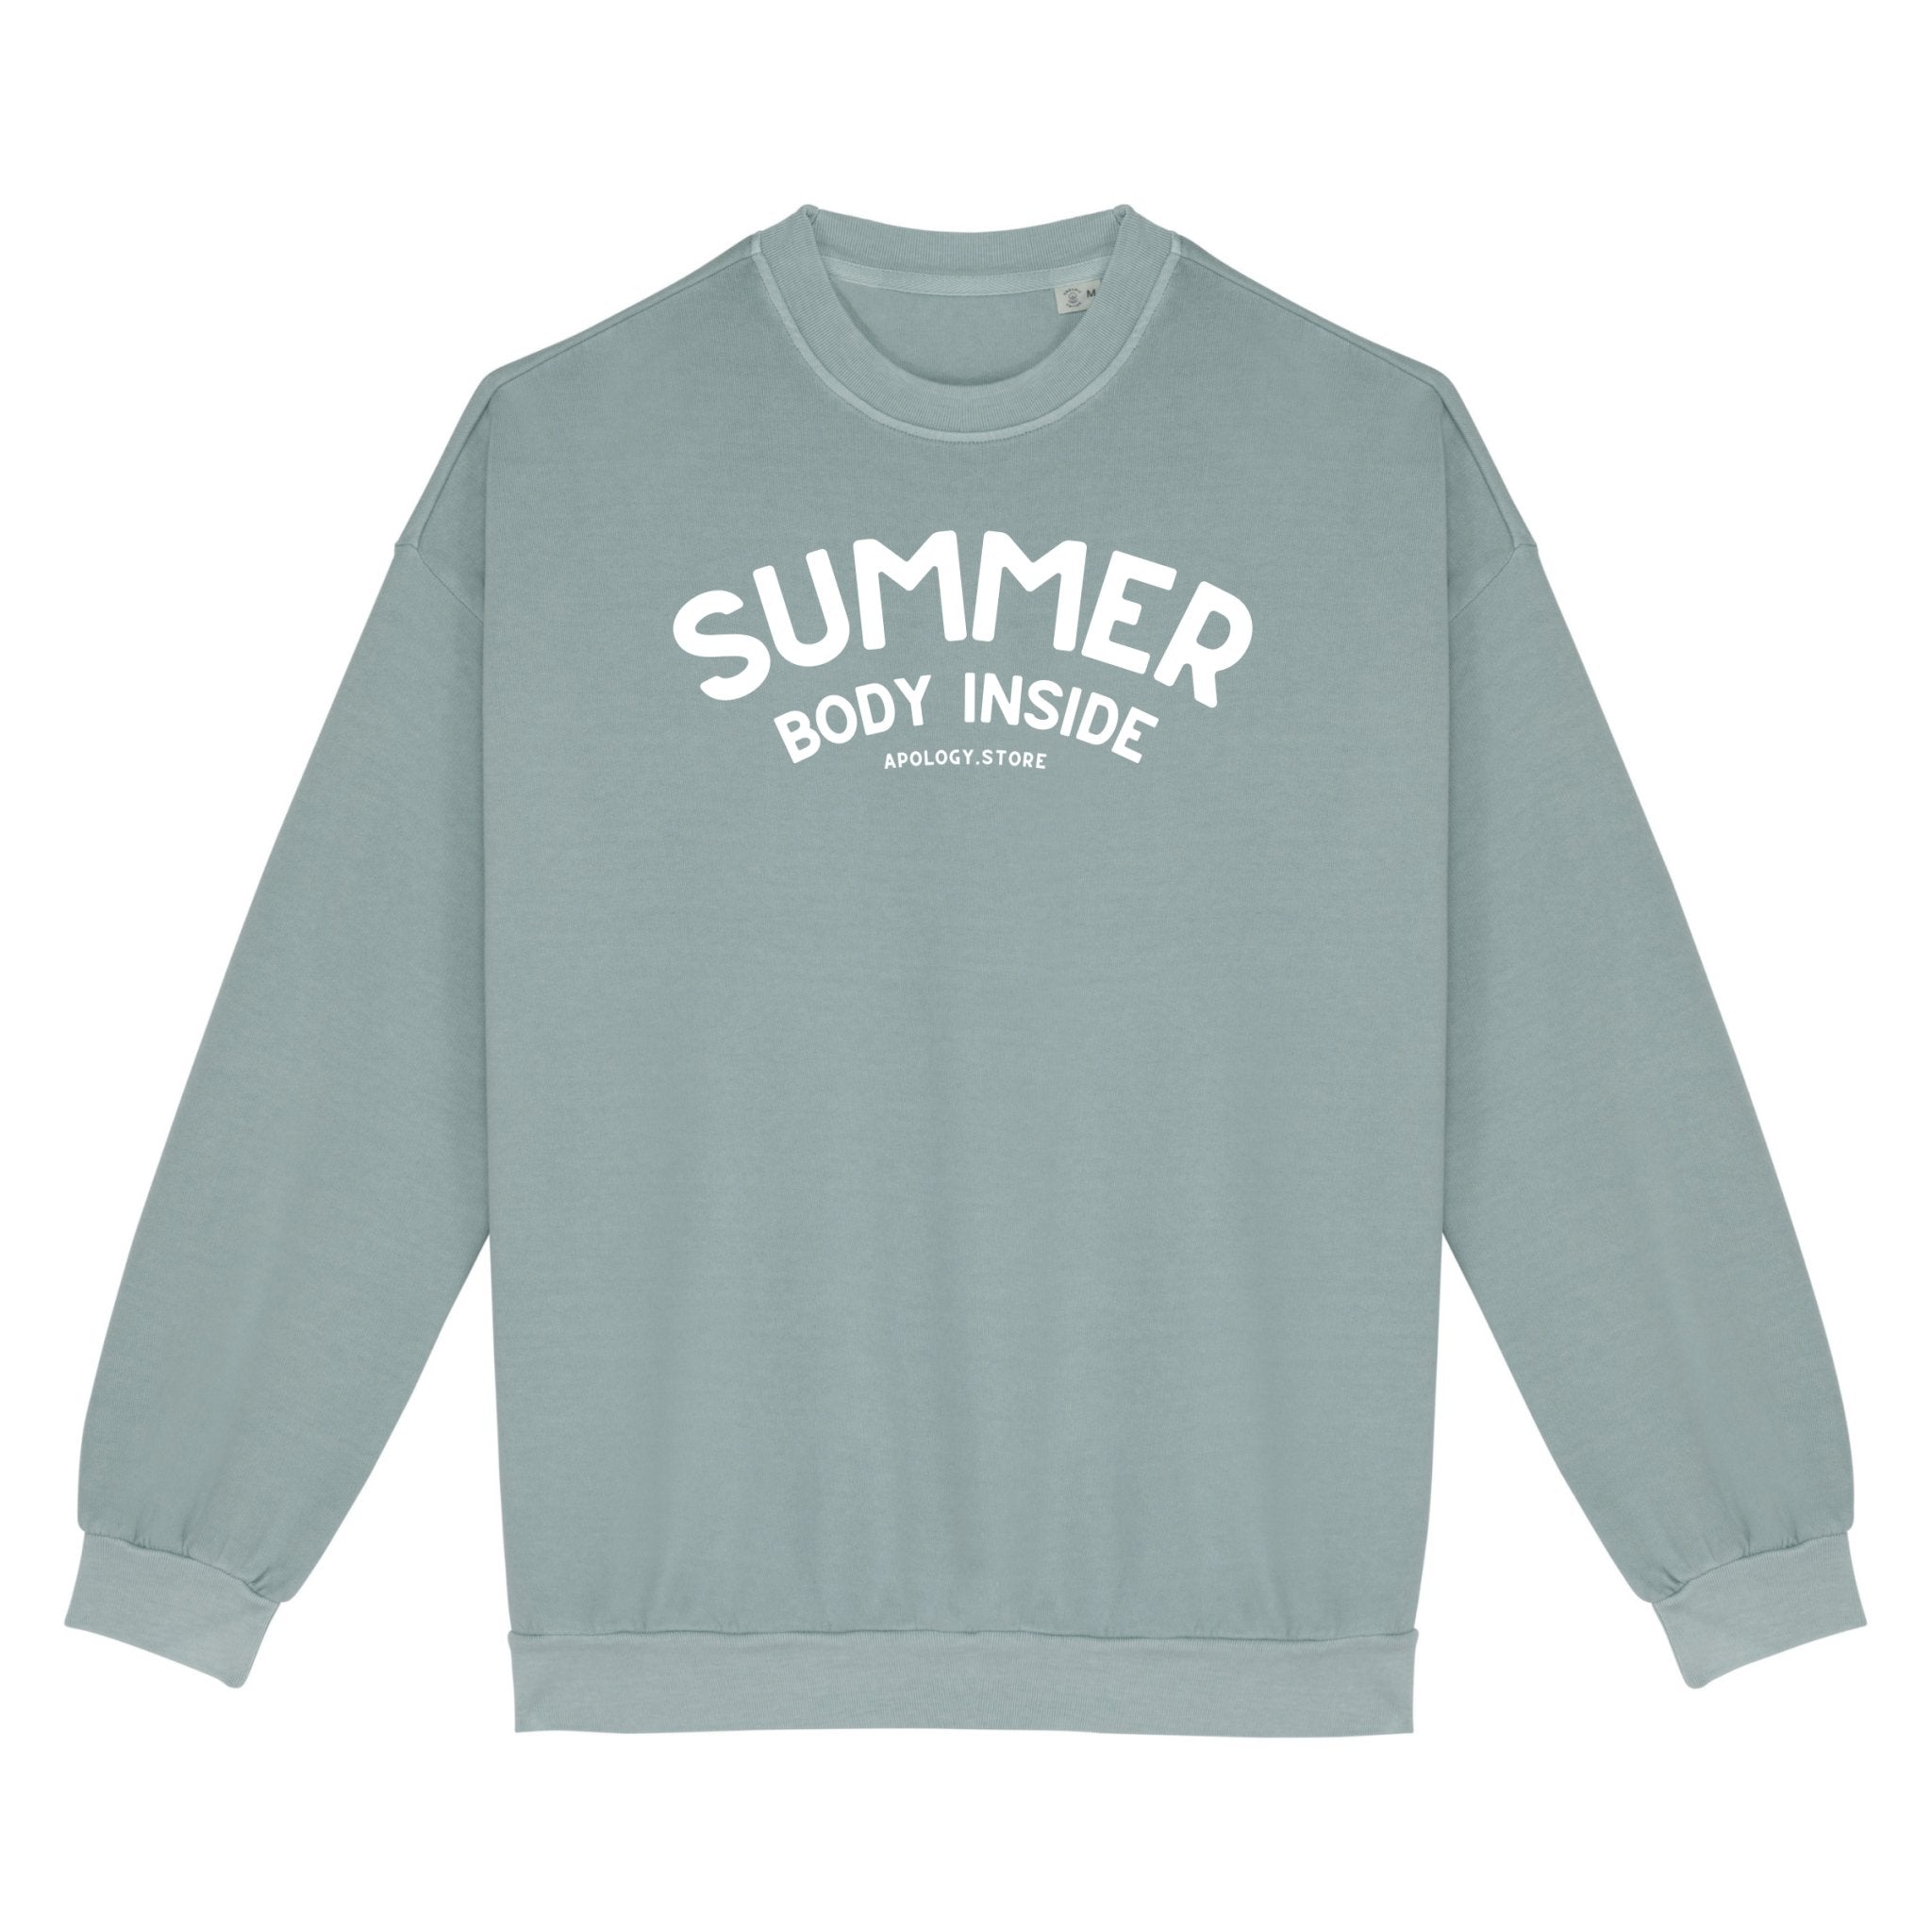 Sweat-shirt Summer Body Inside - Fabriqué au Portugal XS Vert_jade - Imprimé en France